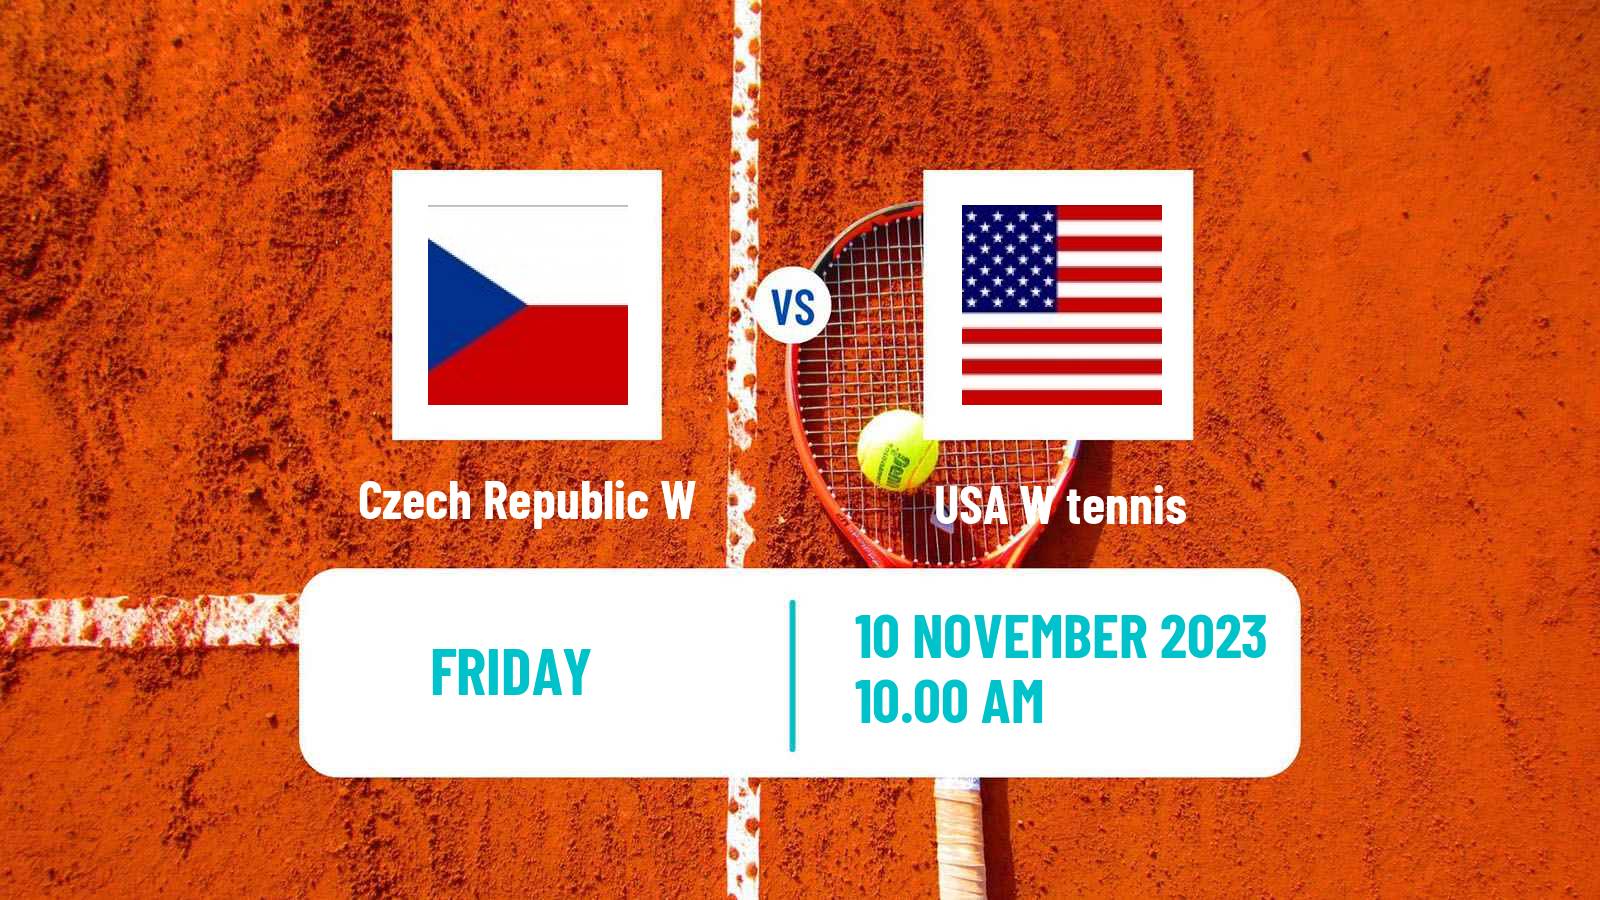 Tennis WTA Billie Jean King Cup World Group Teams Czech Republic W - USA W